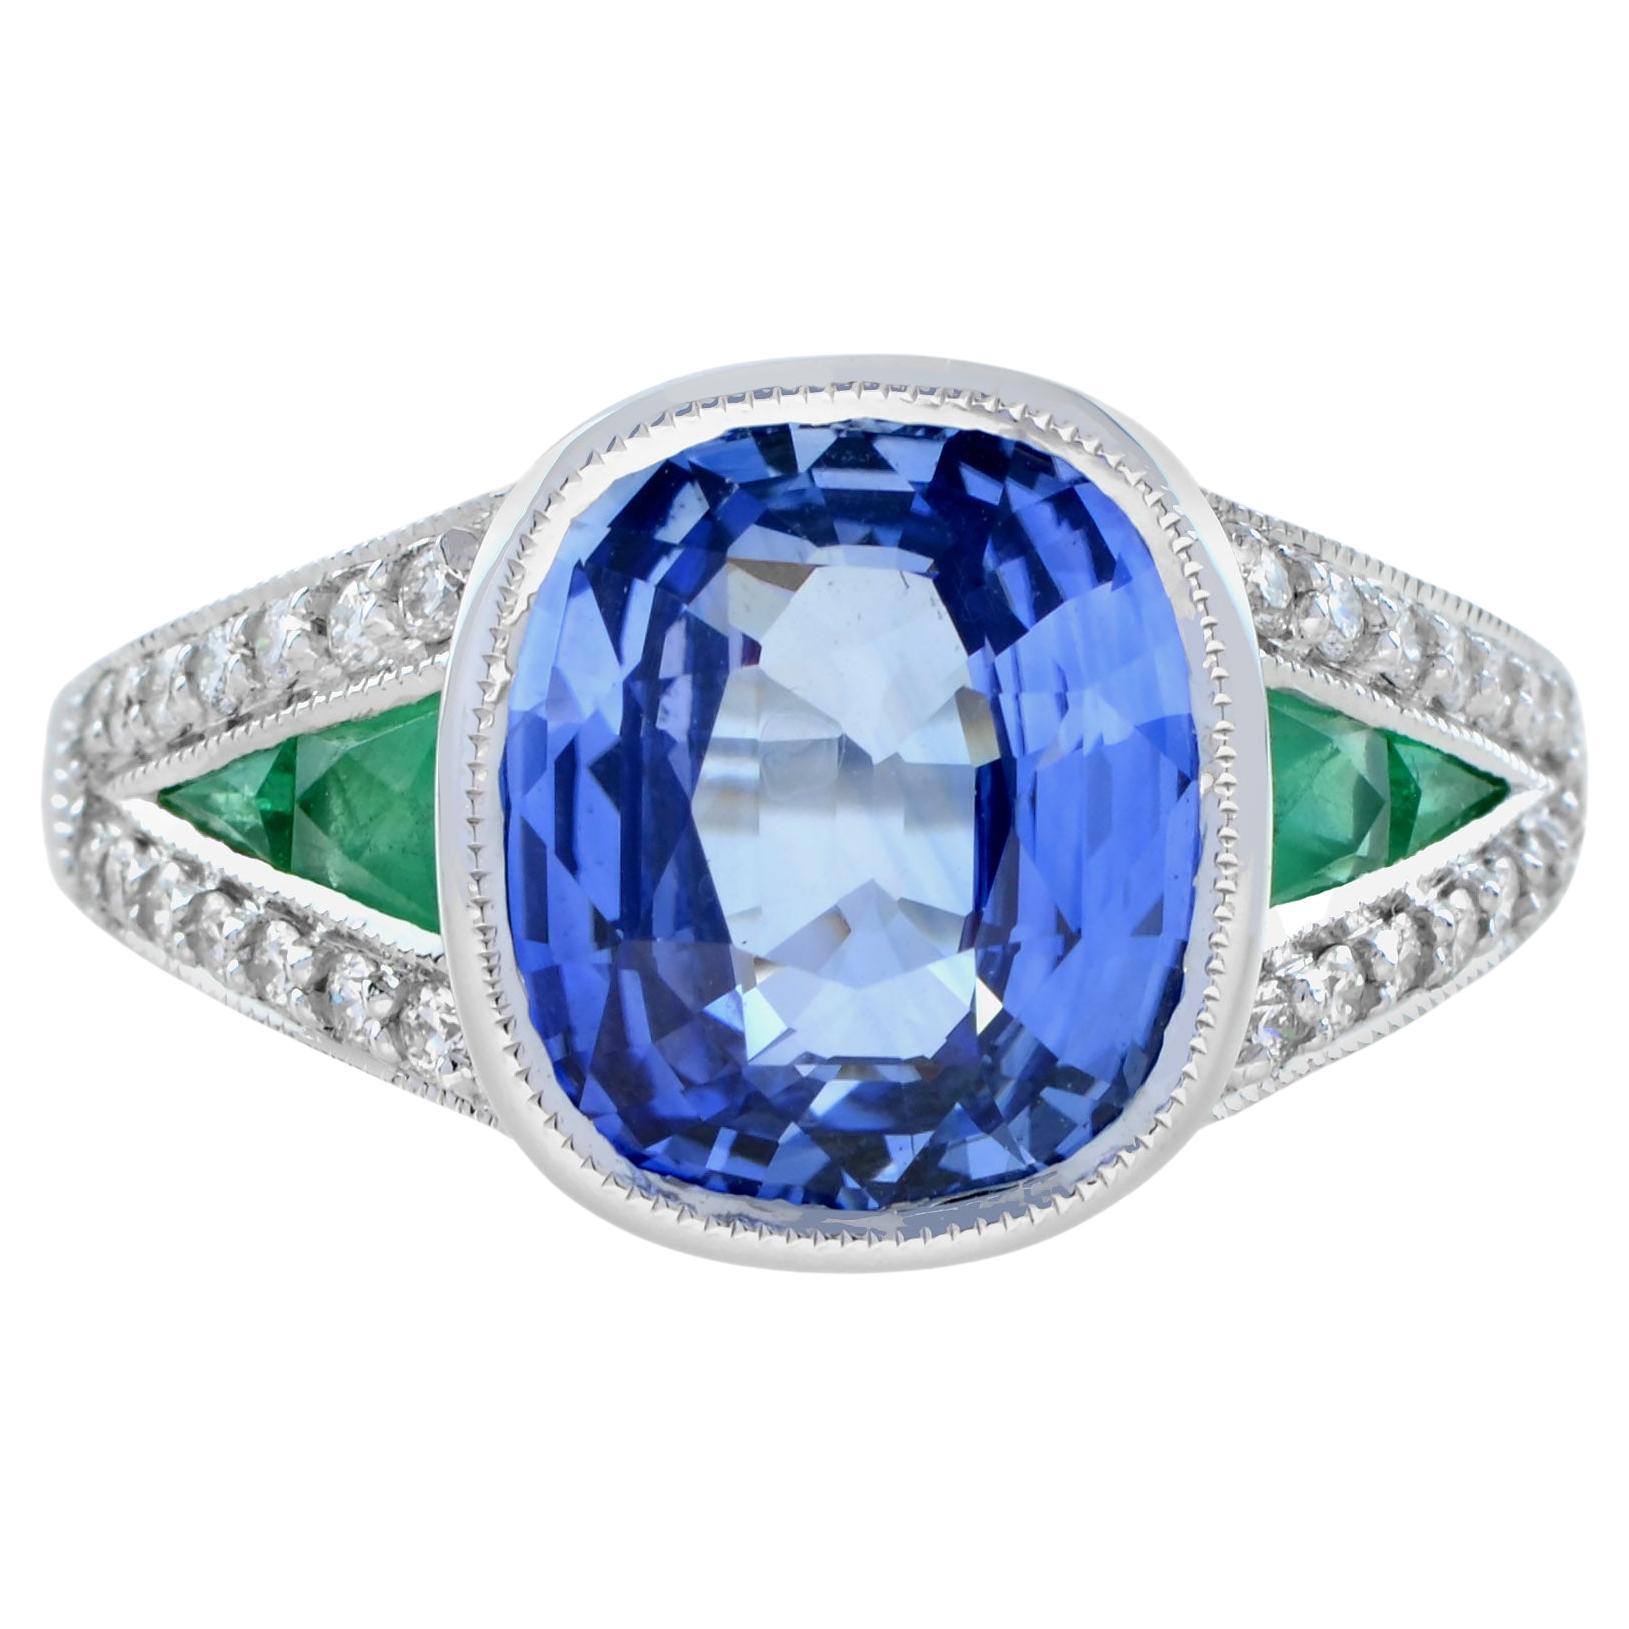 Certified 4.47 Ct. Ceylon Sapphire Emerald Diamond Ring in 18K White Gold For Sale